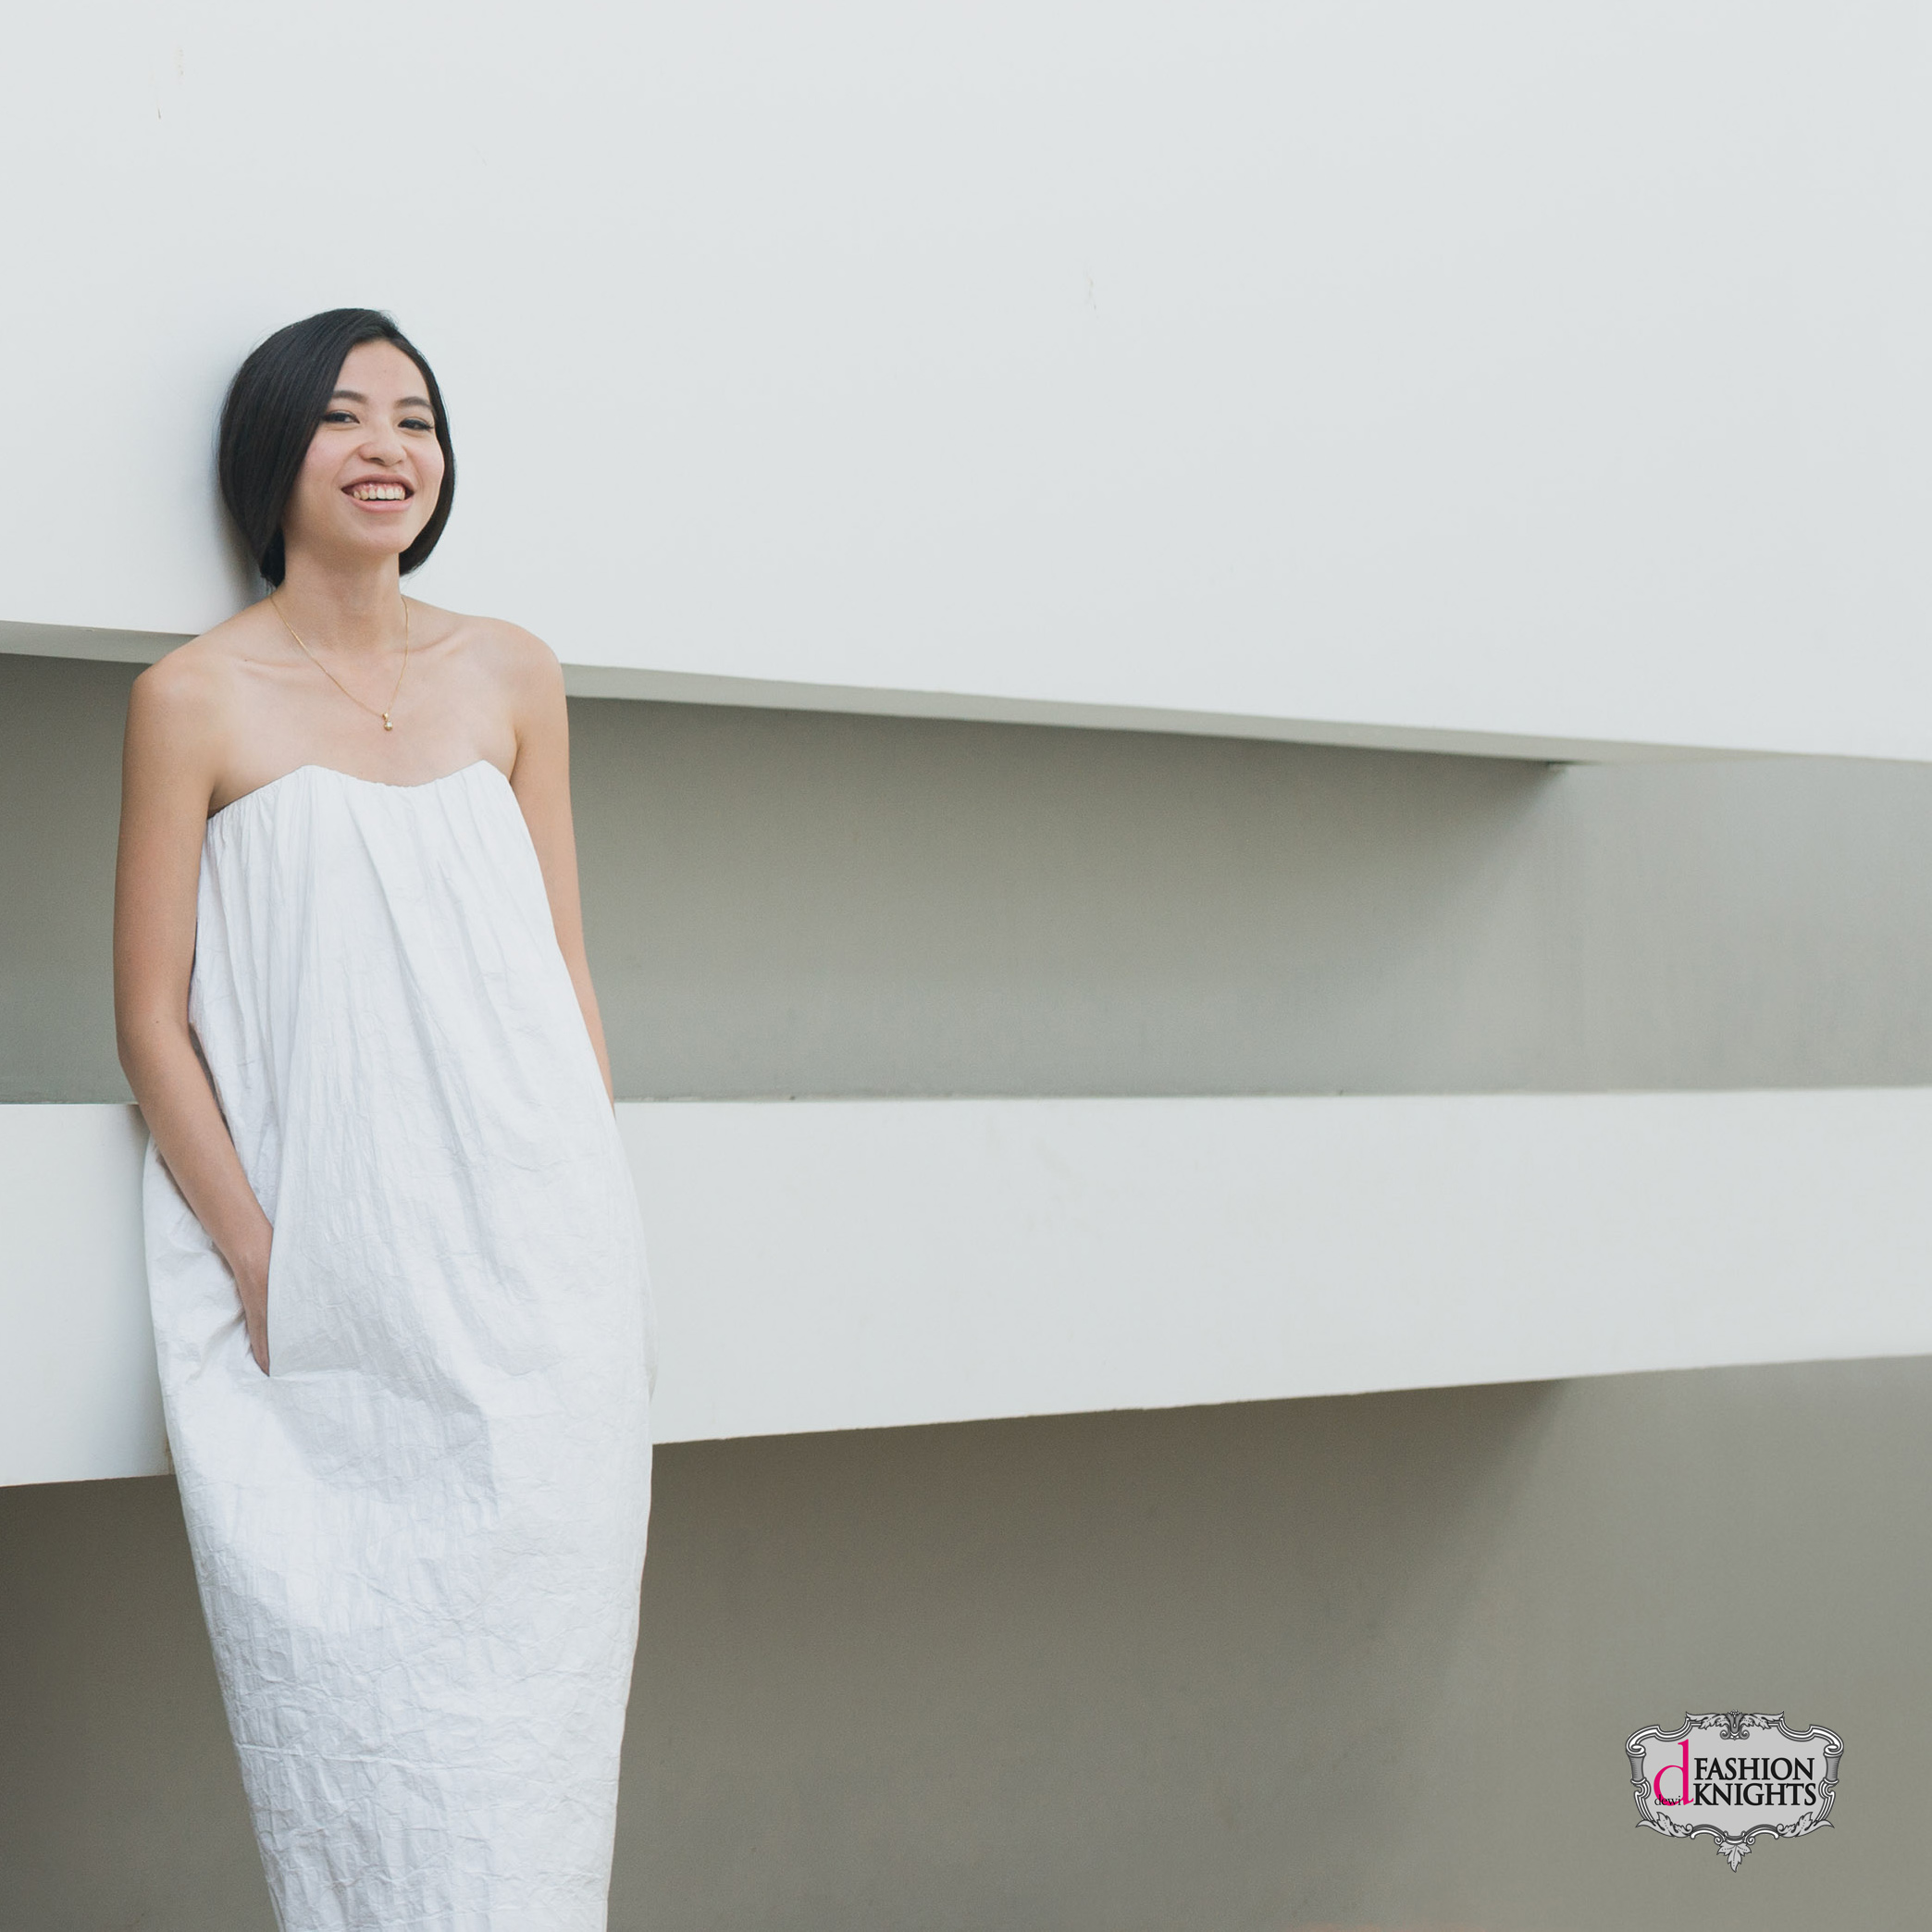 Desainer Muda Bertalenta Felicia Budi, Ksatria Kedua Dewi Fashion Knights 2015